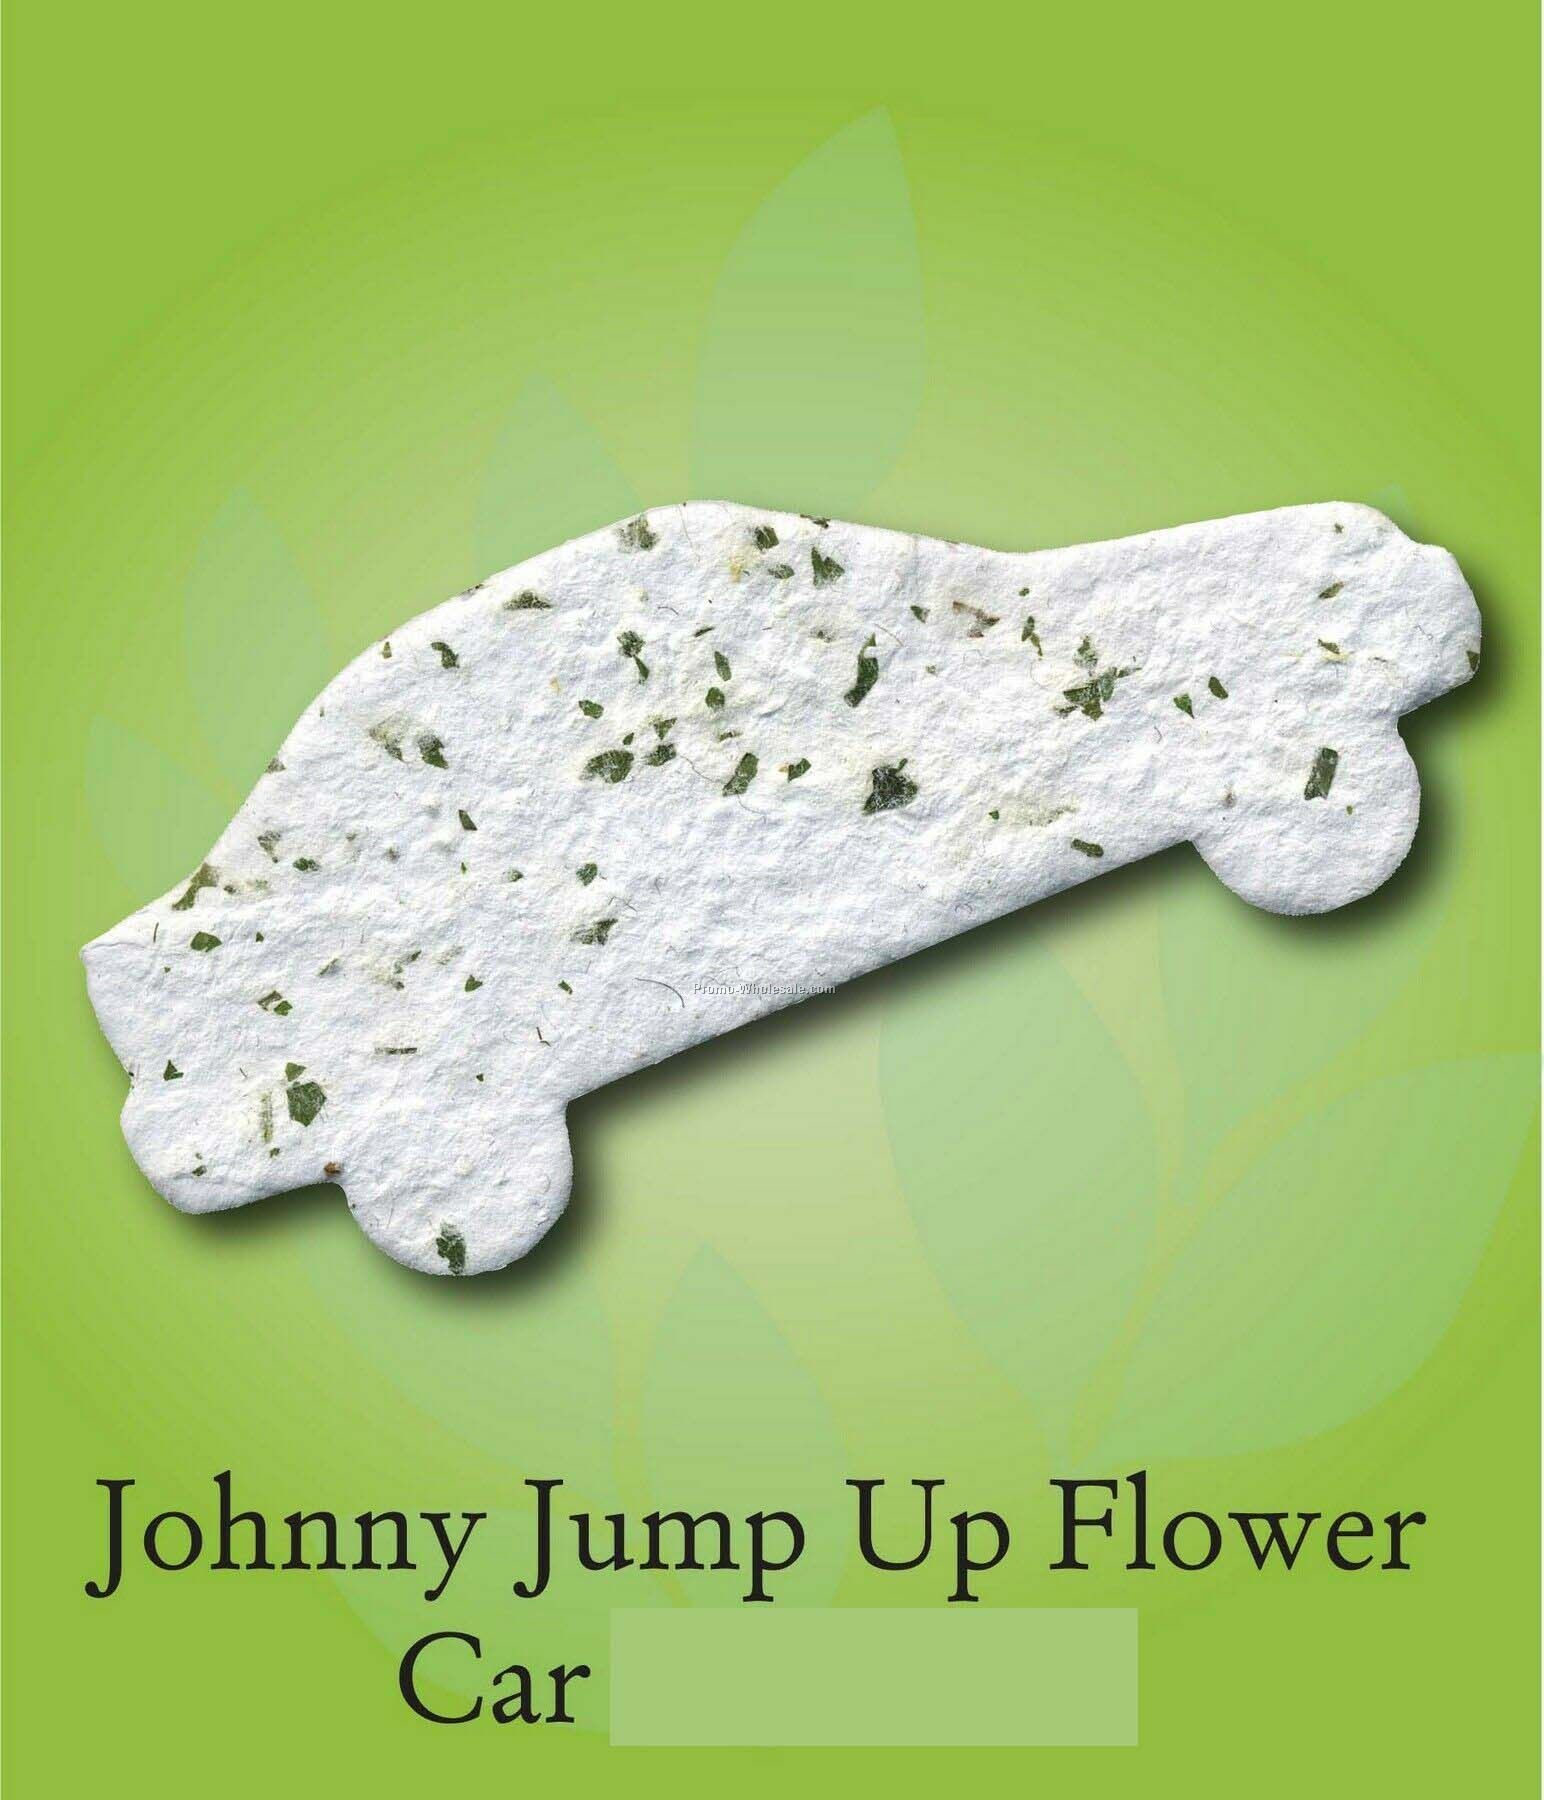 Johnny Jump Up Flower Car Ornament W/ Embedded Seed